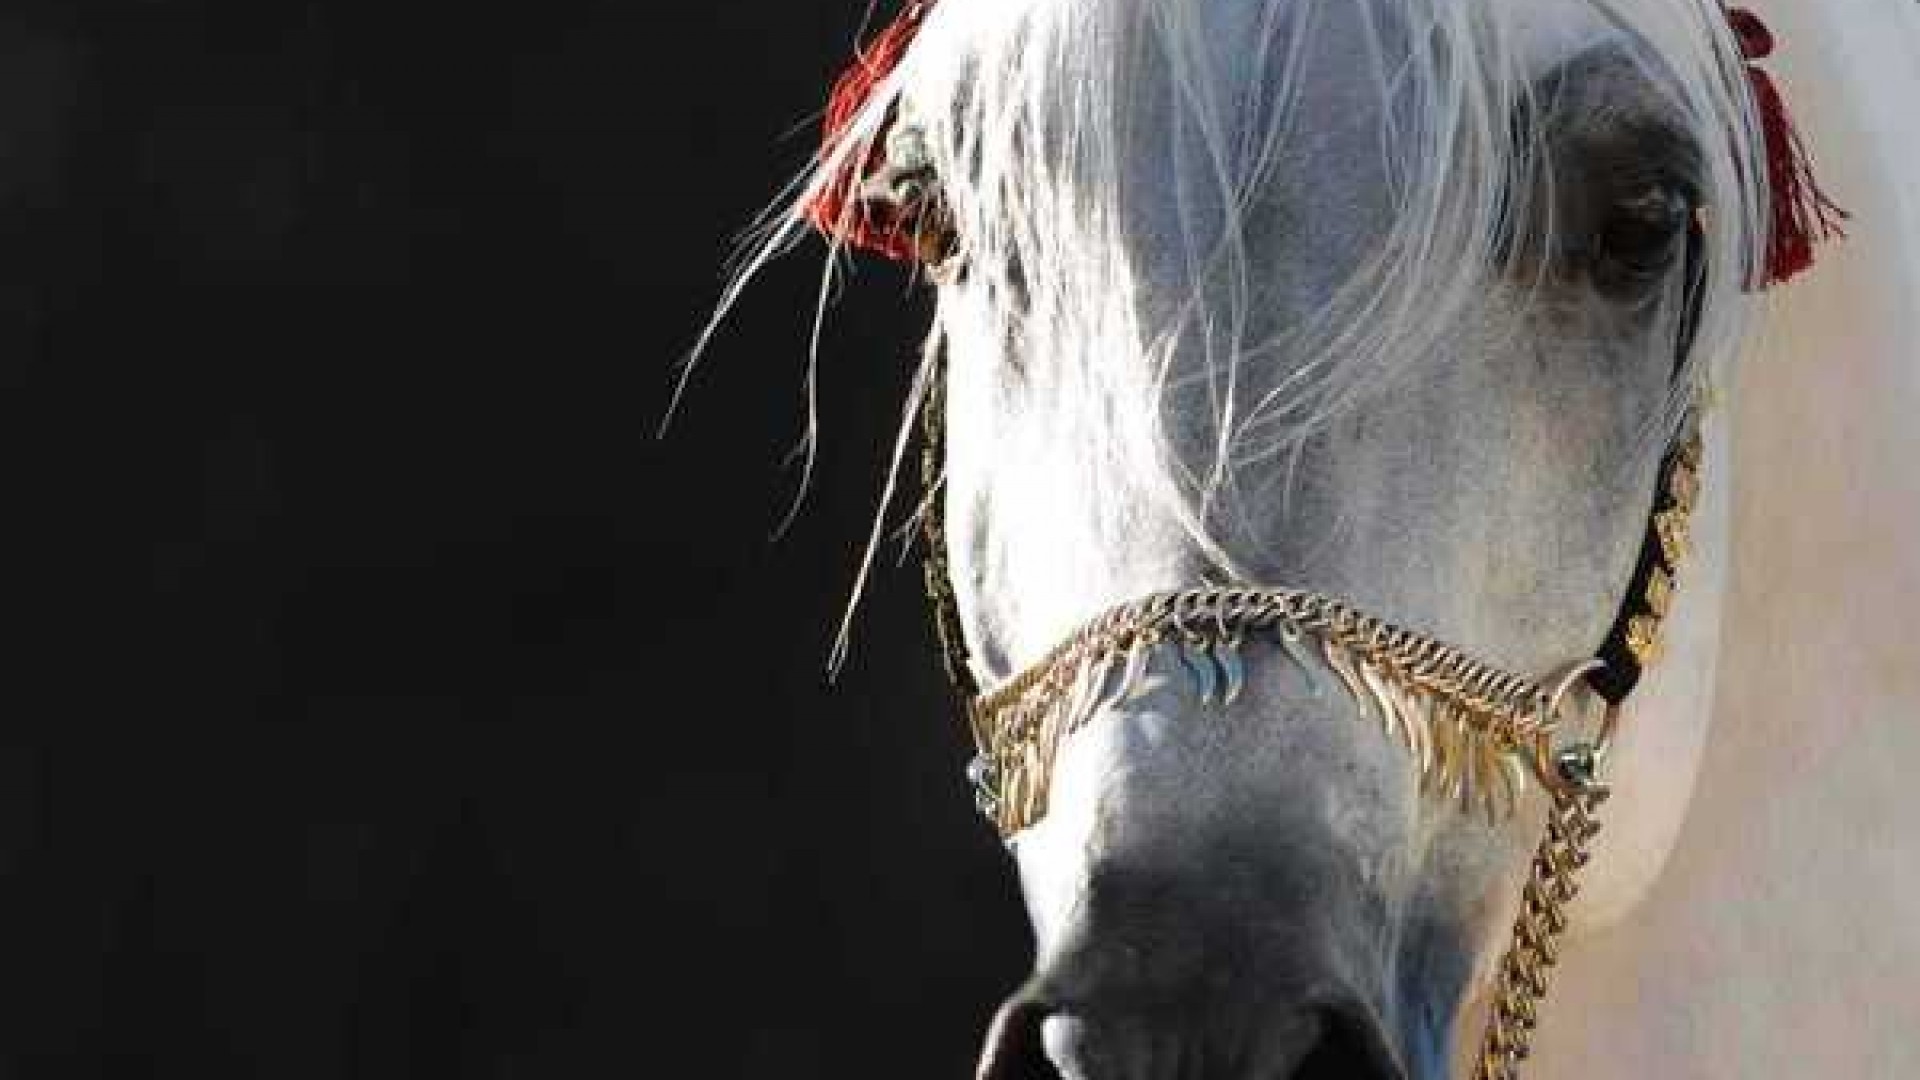 Arabian Horse Photo Gallery Wallpaper 53 Images